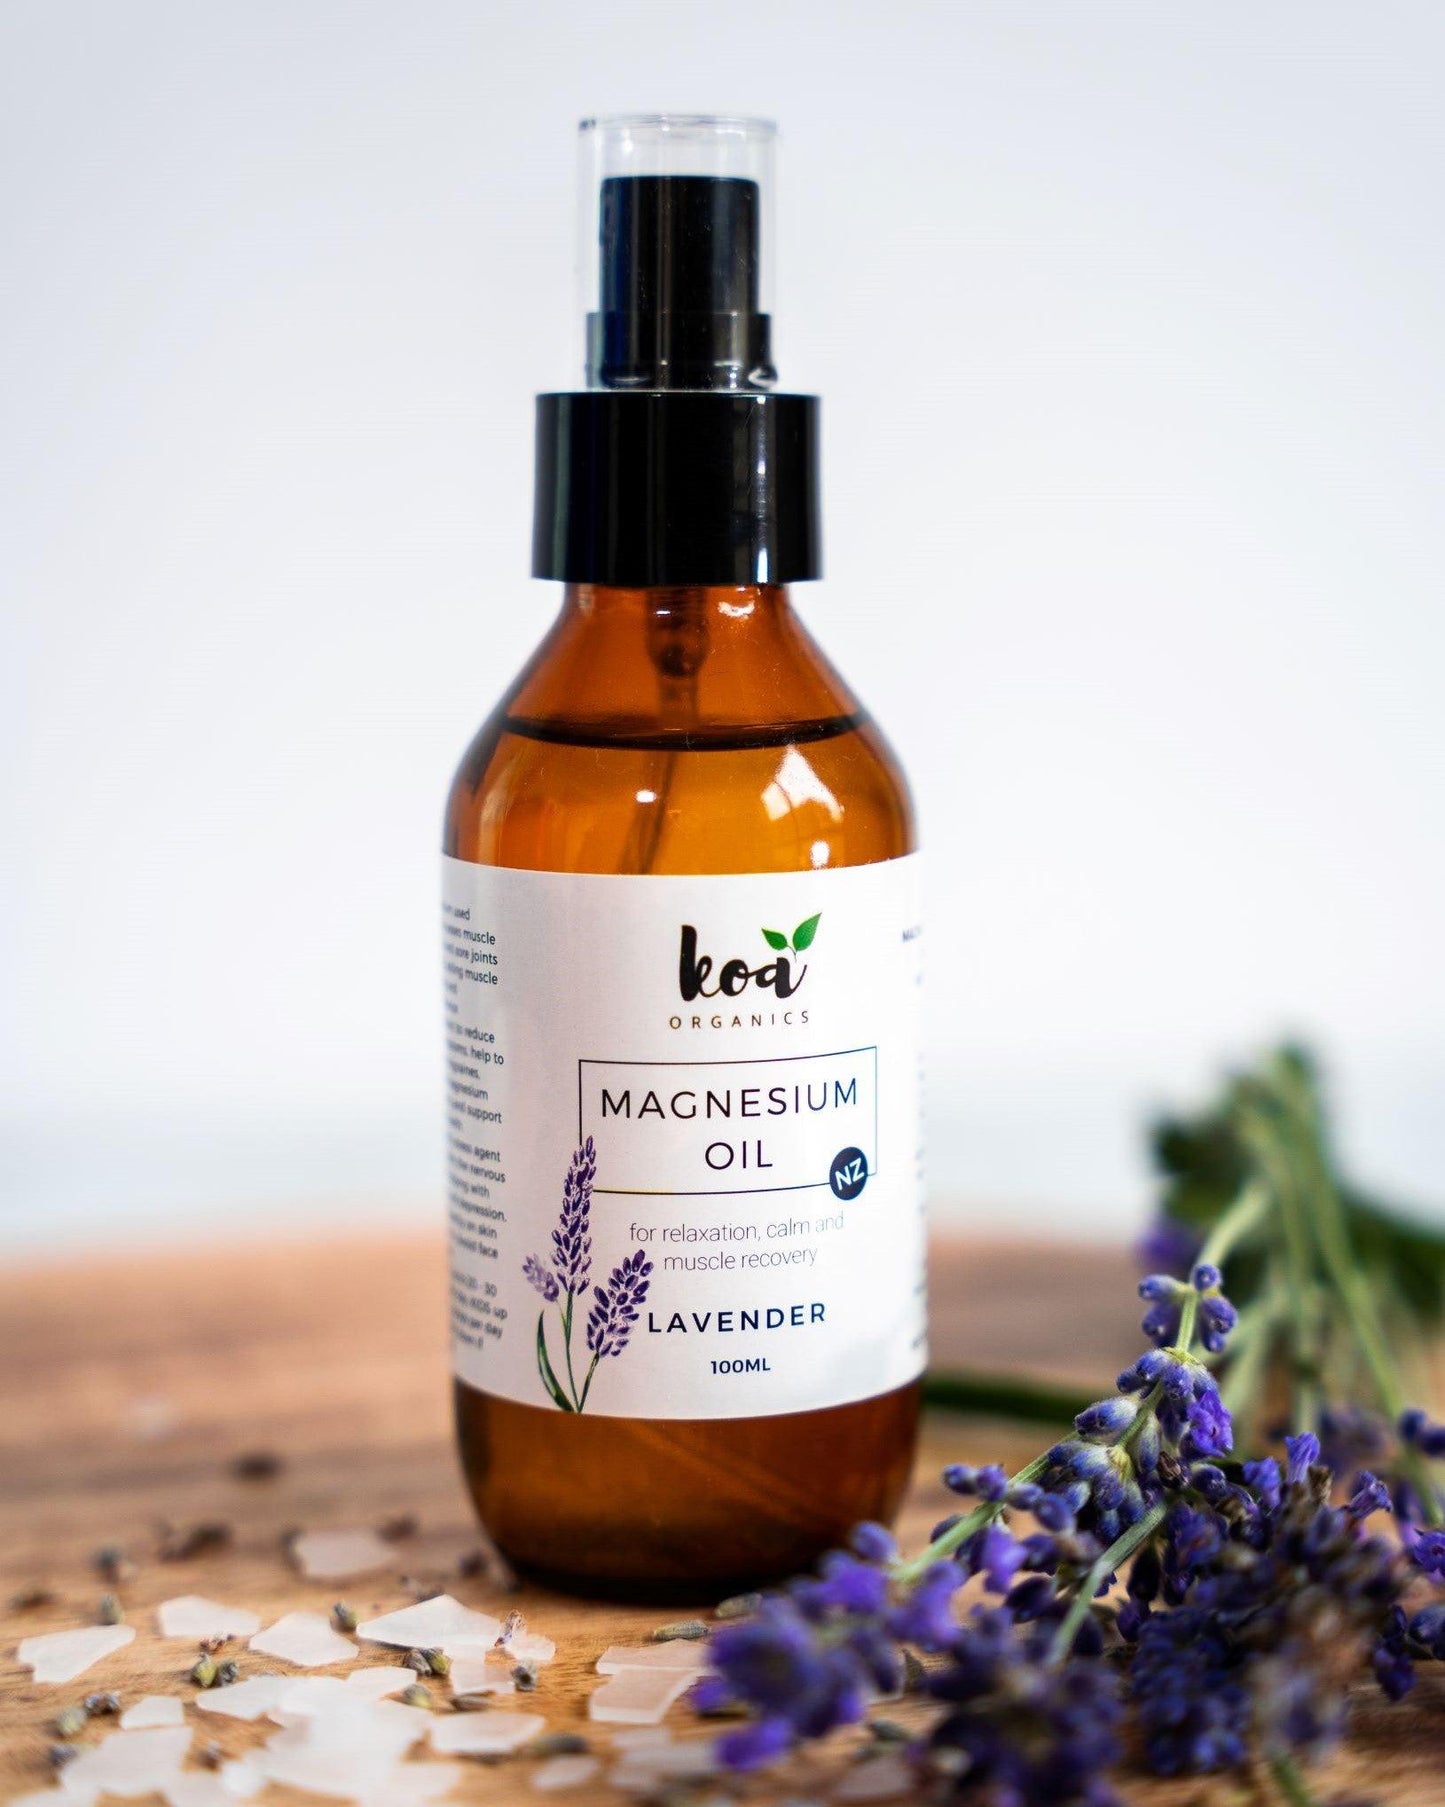 Koa Organics | Magnesium Oil with Lavender - Yoho Baby & co.